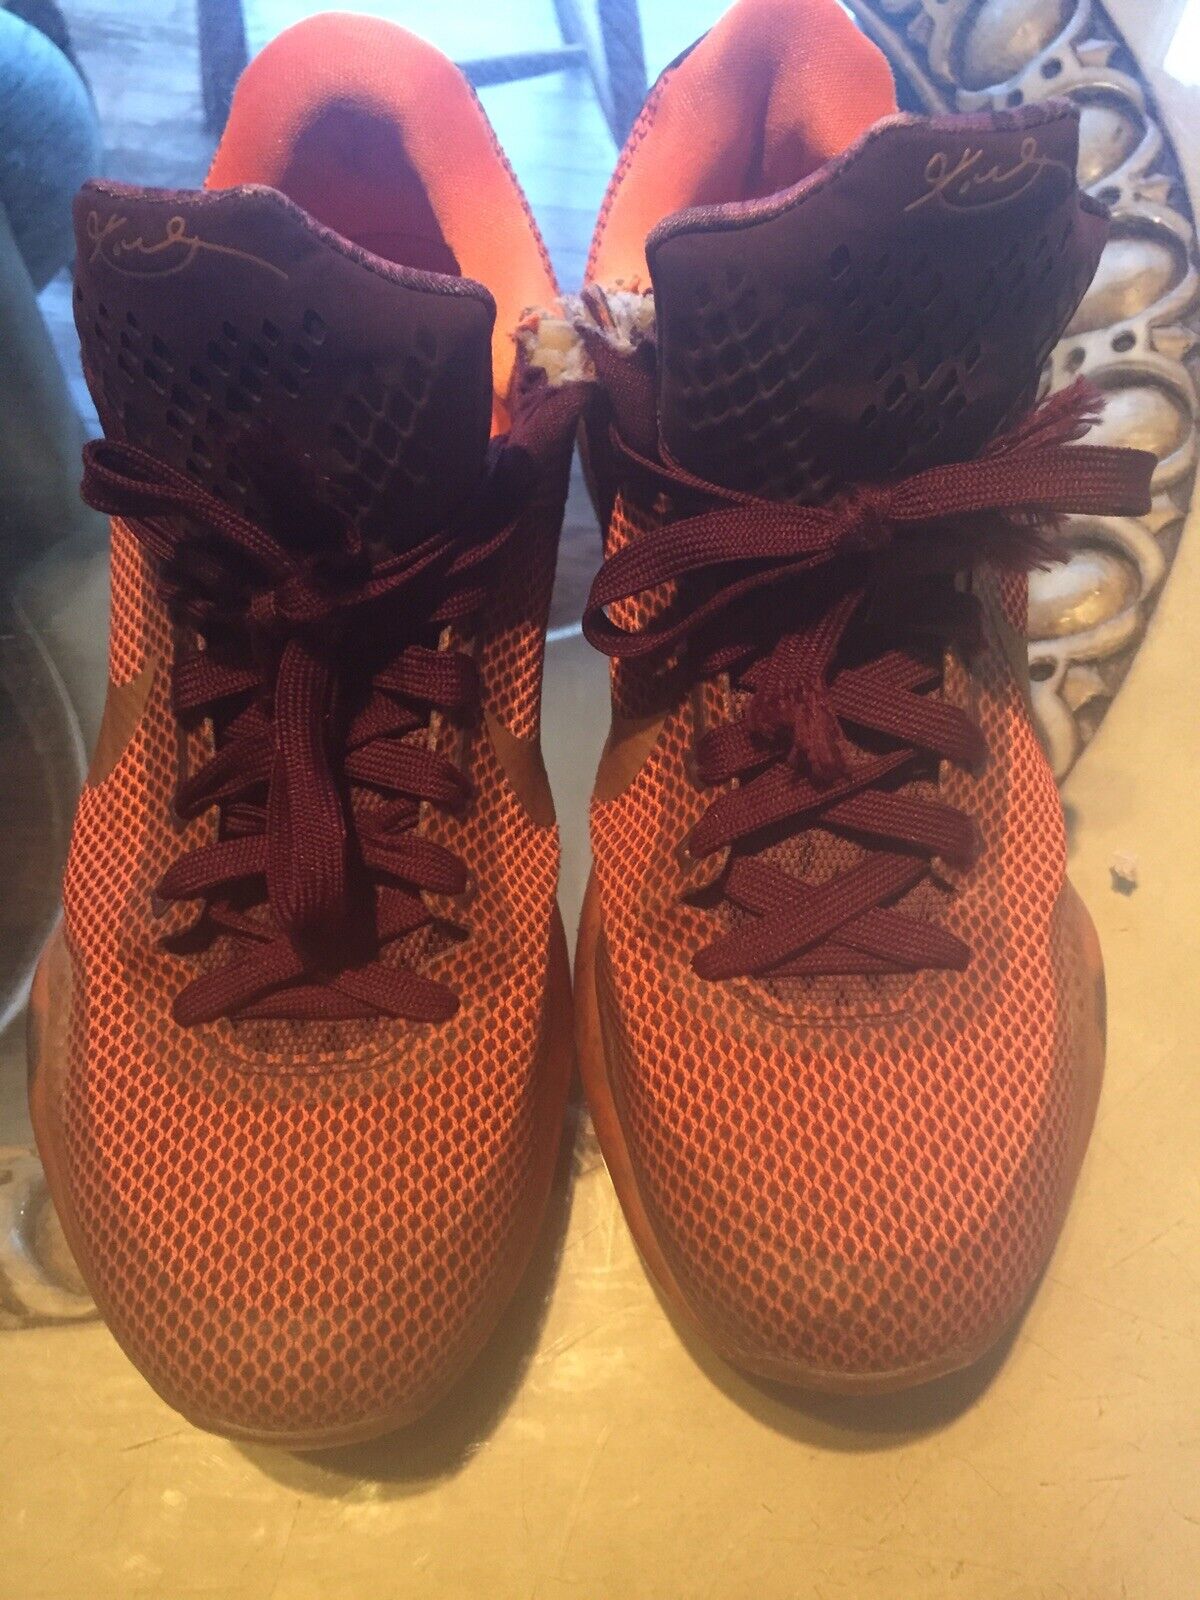 Nike Unisex Burnt Orange/Dark Red Sneakers Size 9 - image 1